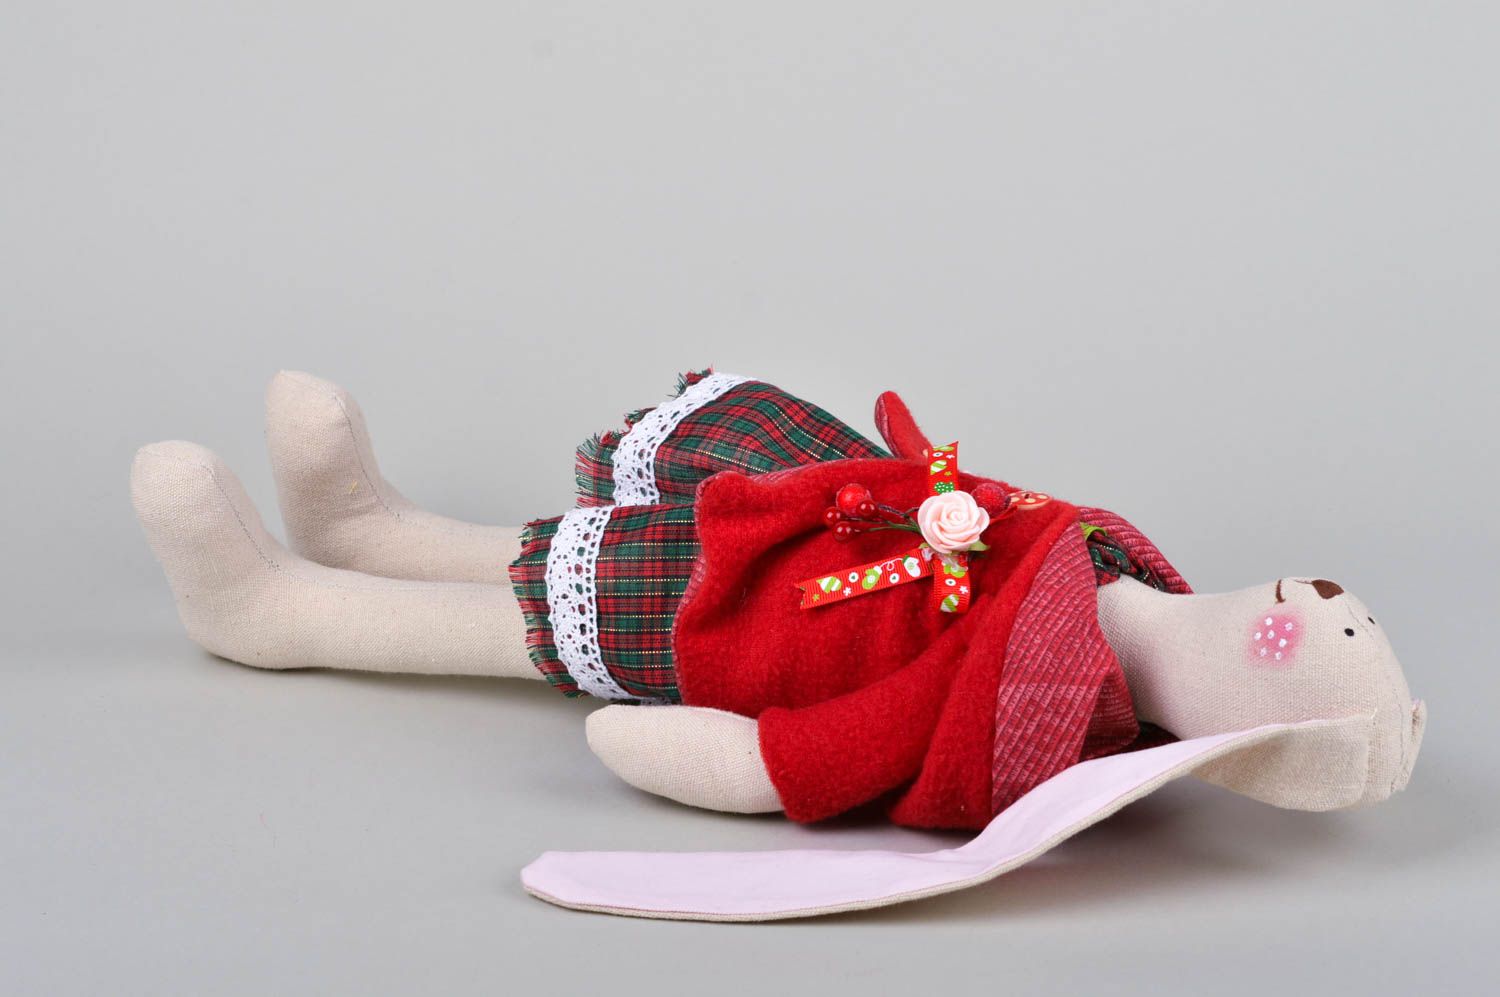 Handmade designer soft rabbit unusual stylish cute toy nursery decor ideas photo 2